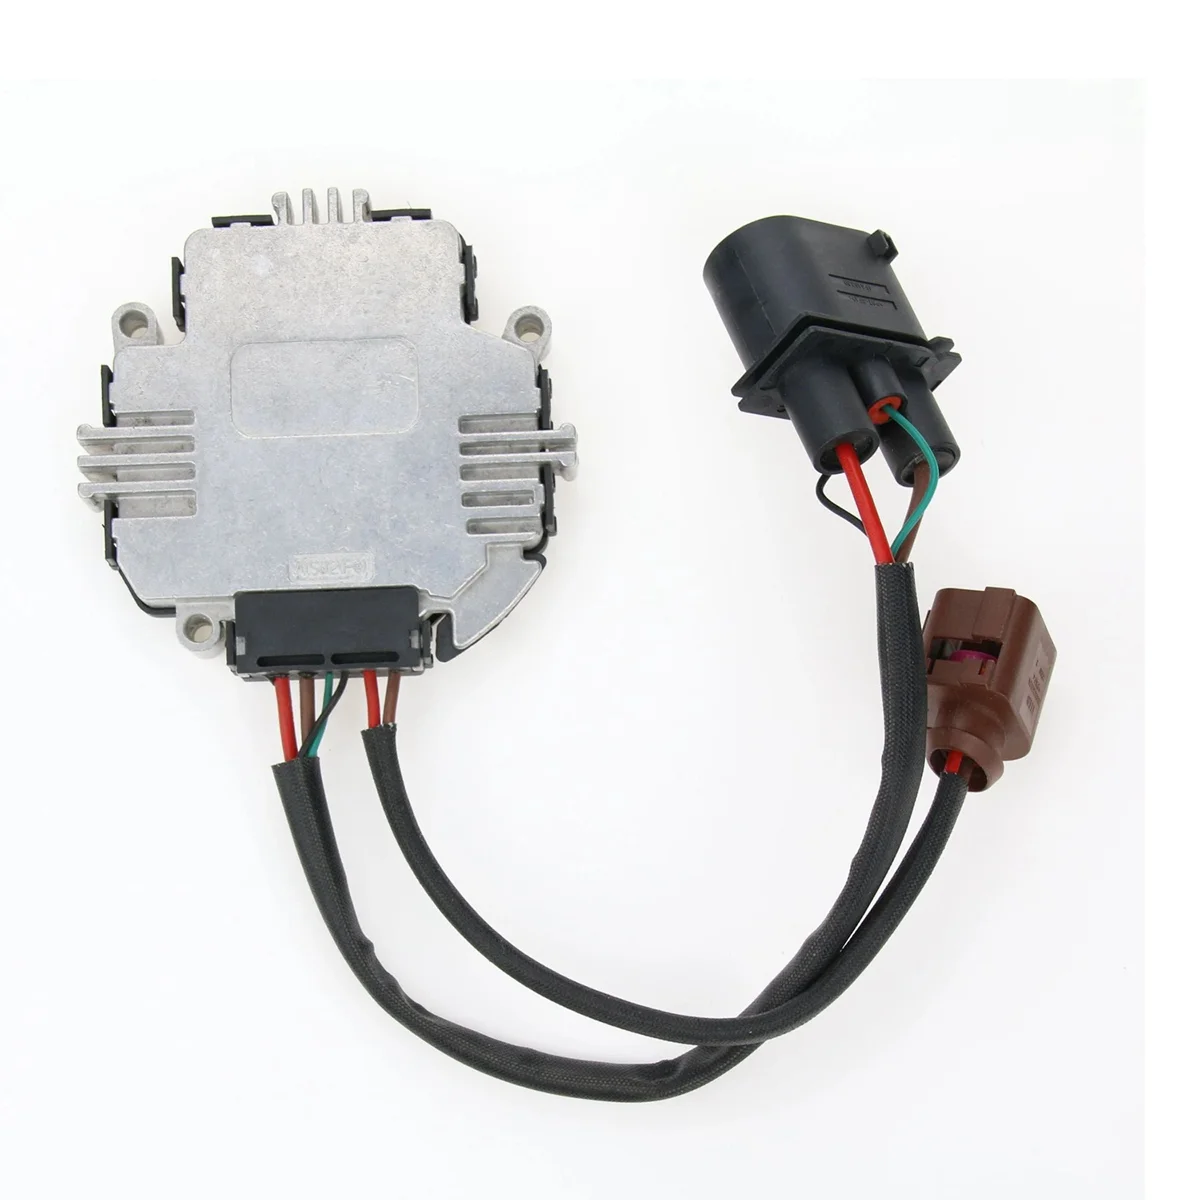 1K0959455N 1TD959455 Модул за управление на вентилатор Радиаторный Радиаторный резистор на вентилатора Auto, за TT Golf